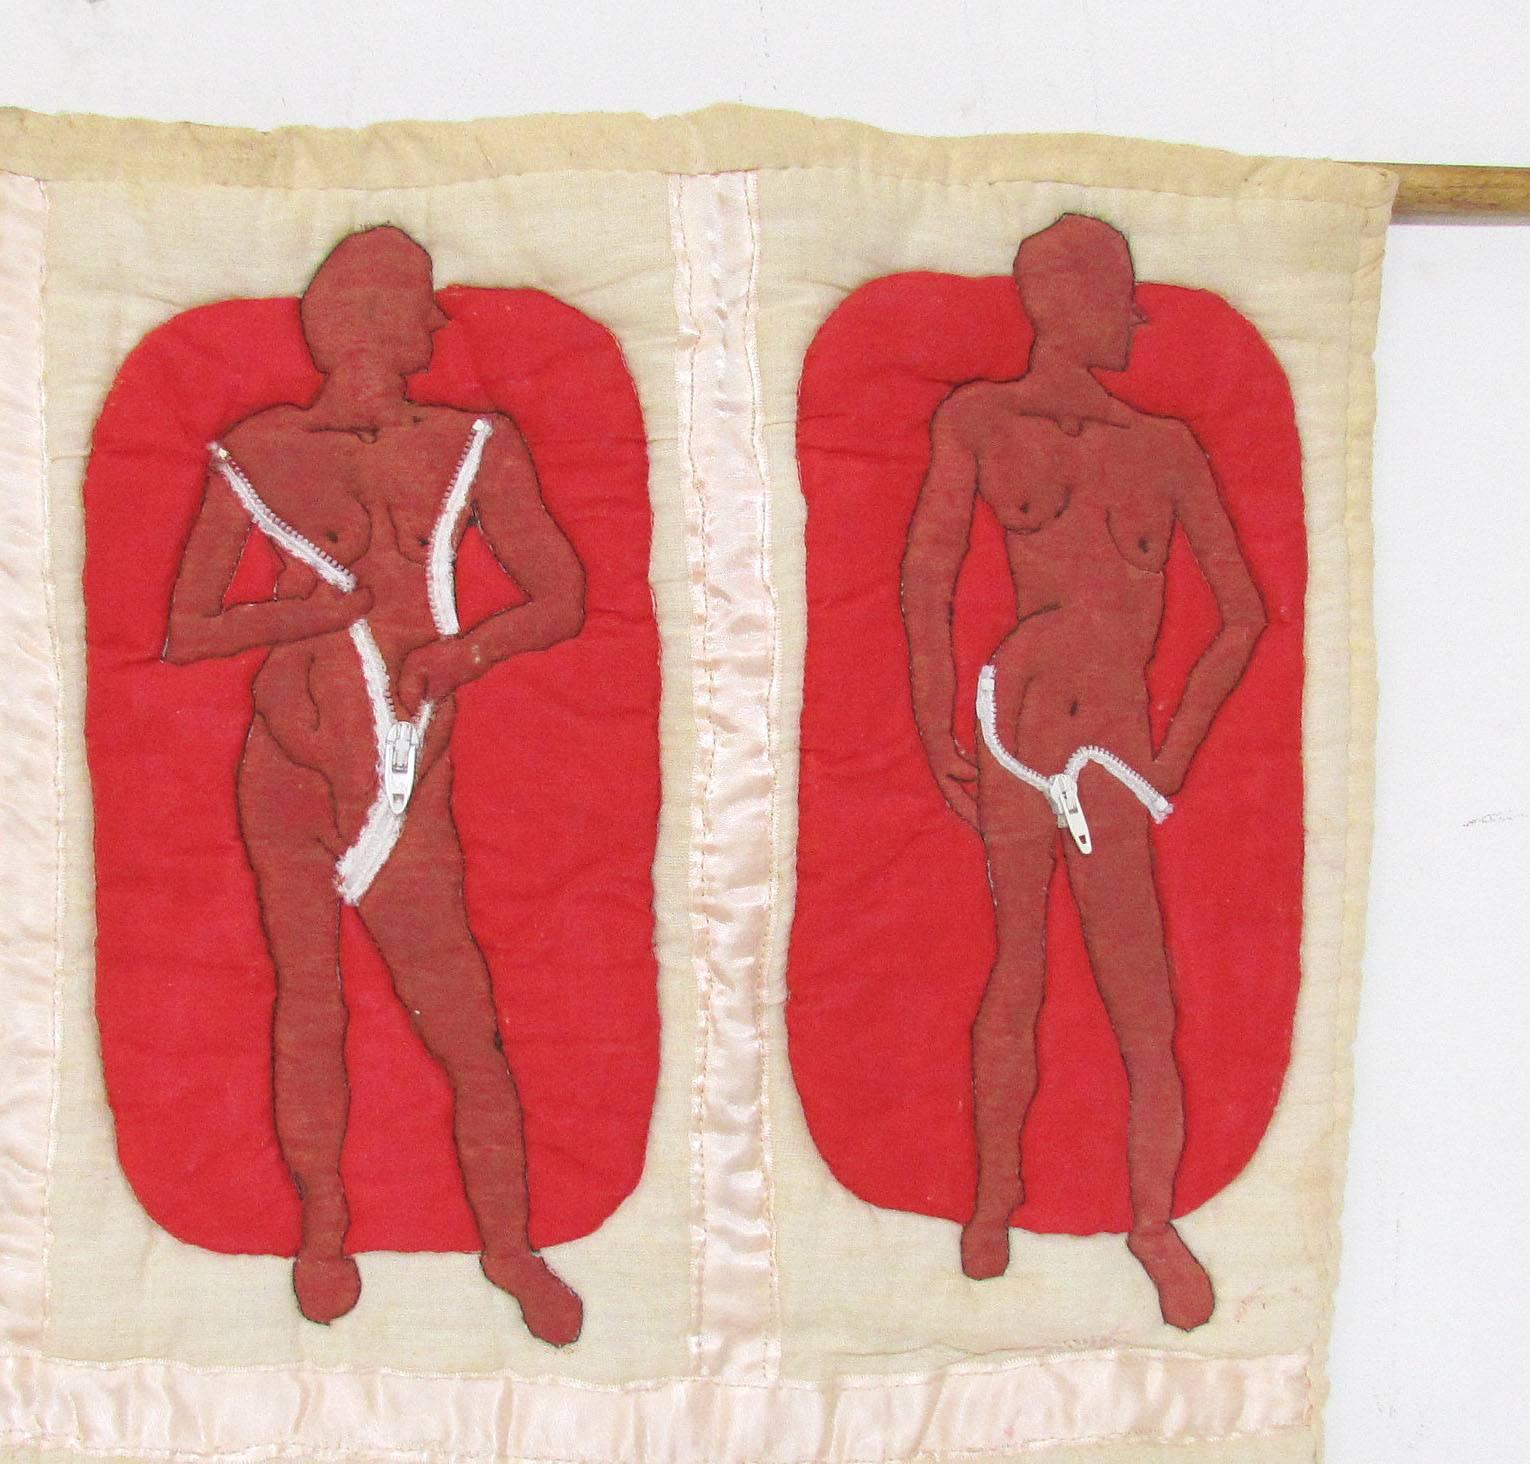 Outsider Art Rare 1970s Handmade Textile Art Wall Hanging Depicting Gender Transformation